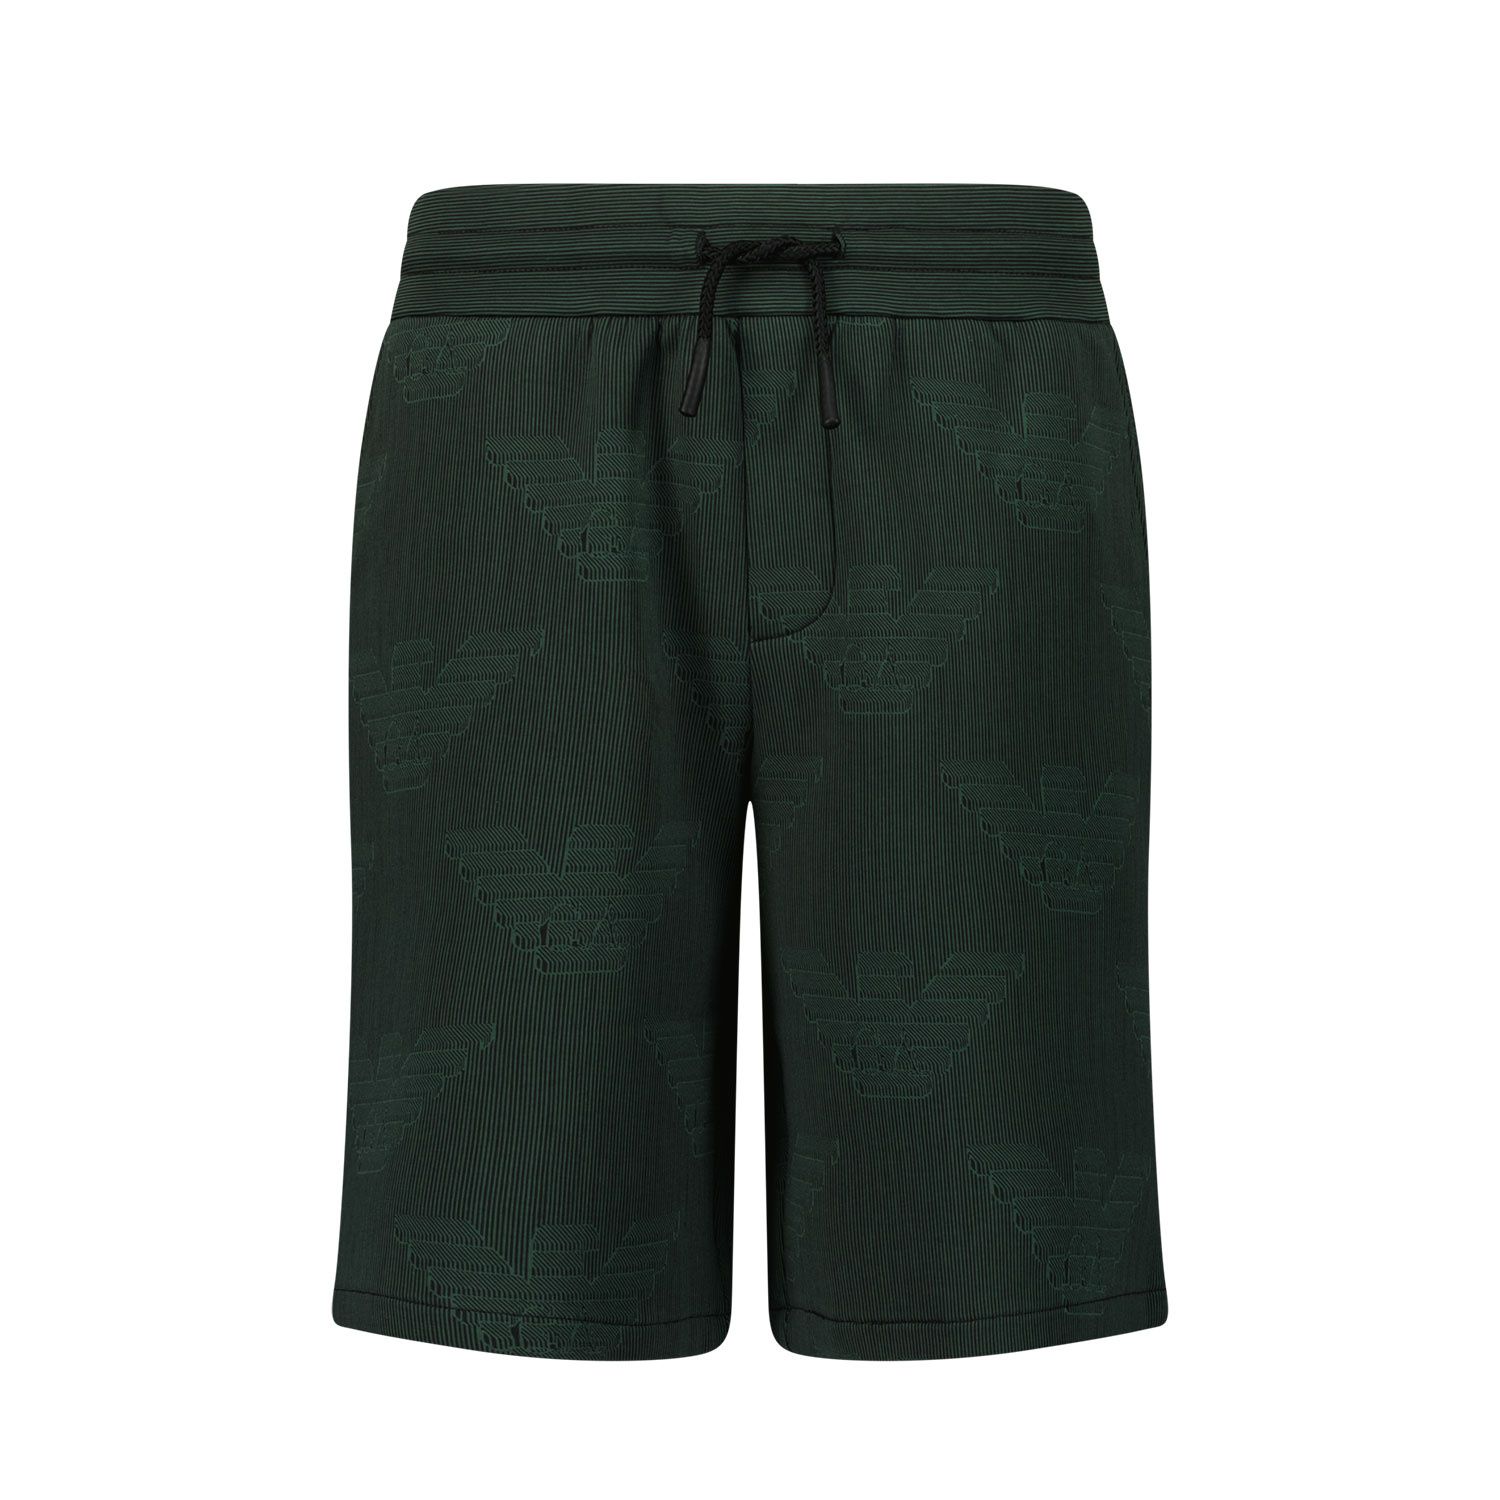 Afbeelding van Armani 3L4PFT kinder shorts donker groen